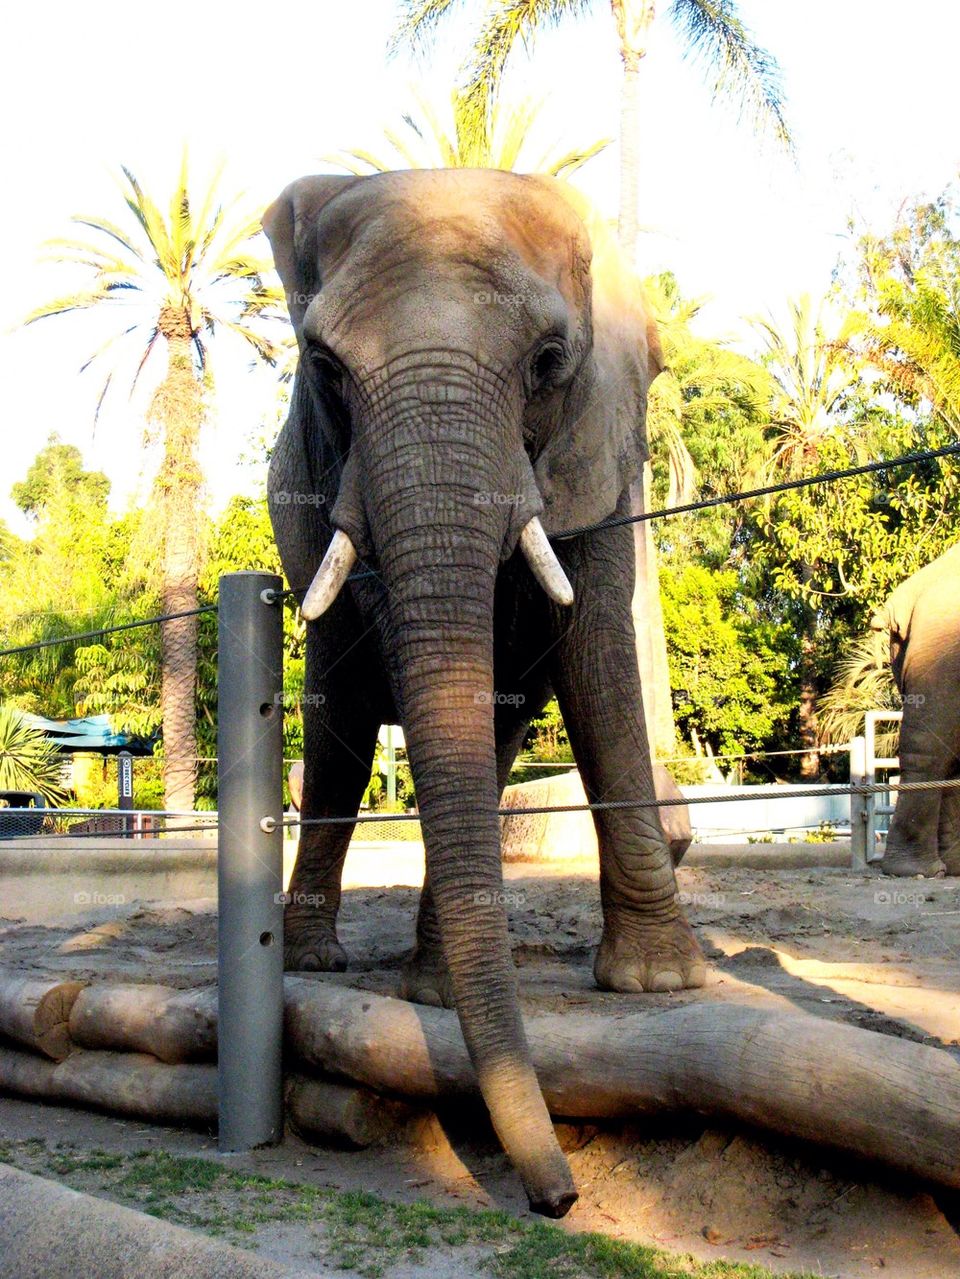 Elephant at the zoo 